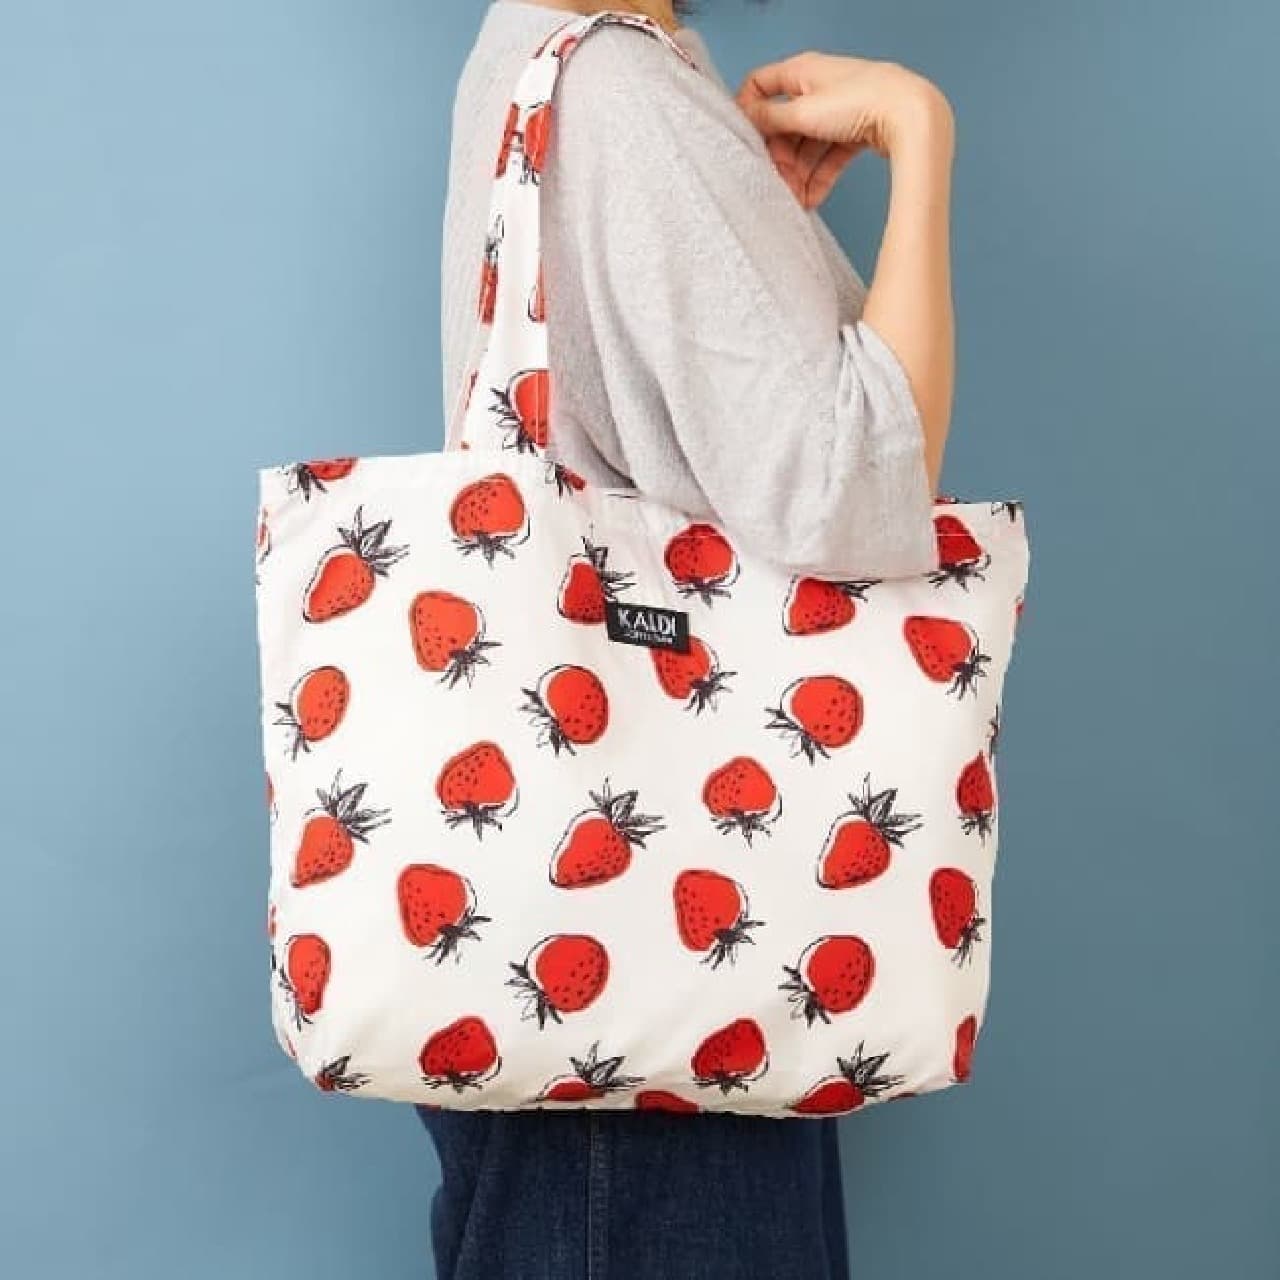 "Strawberry bag" from KALDI Coffee Farm